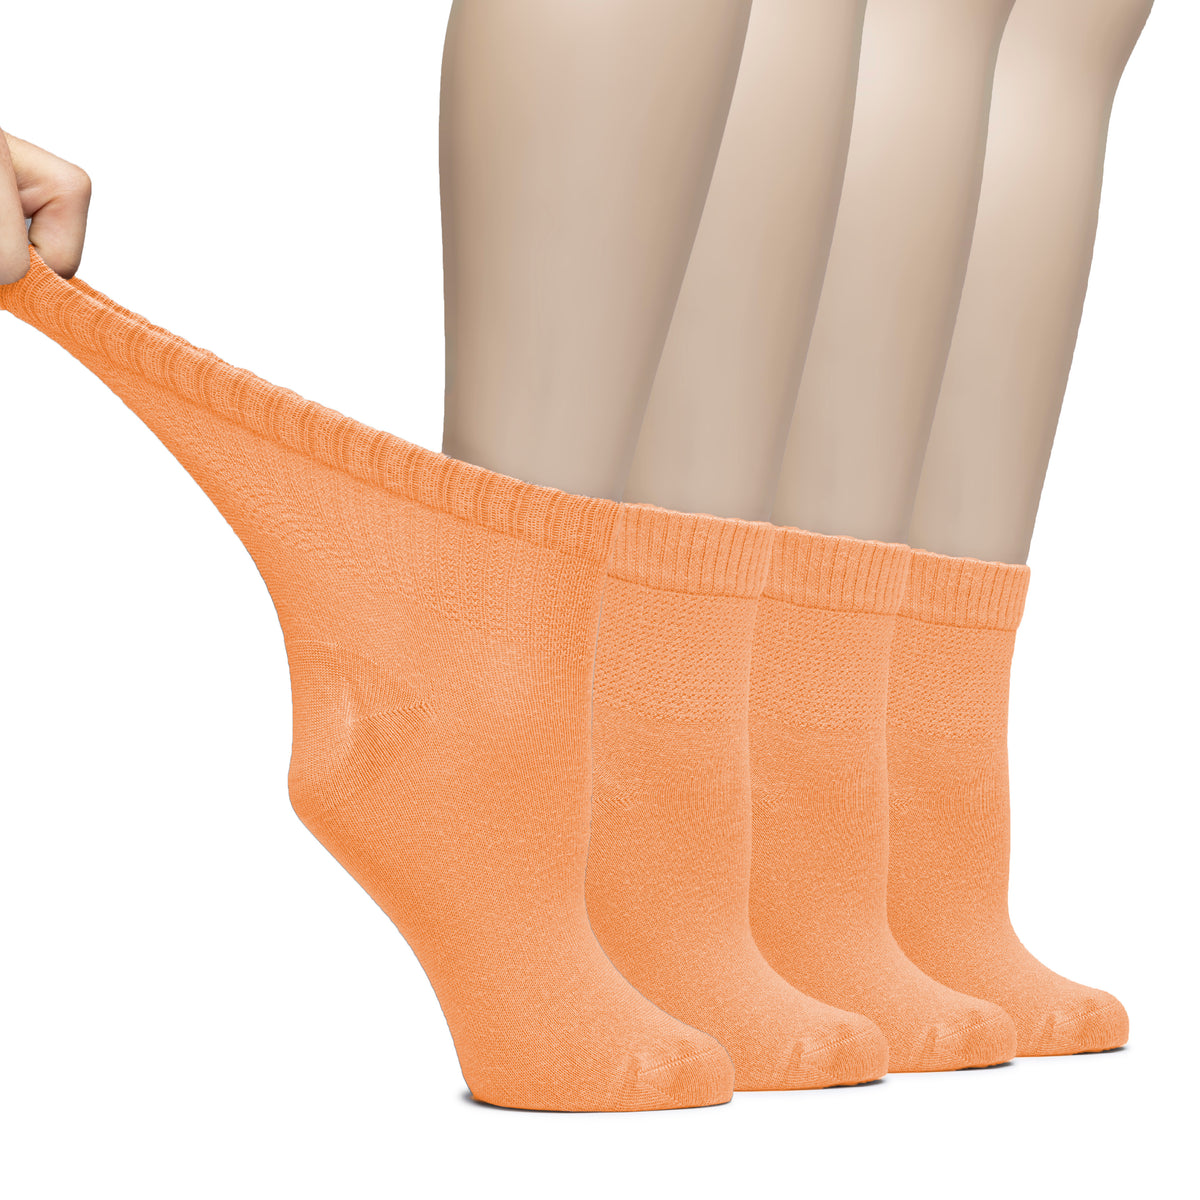 Hugh Ugoli Lightweight Women's Diabetic Ankle Socks Bamboo Thin Socks Seamless Toe and Non-Binding Top, 4 Pairs, , Shoe Size: 6-9/10-12 | Shoe Size: 6-9 | Pink